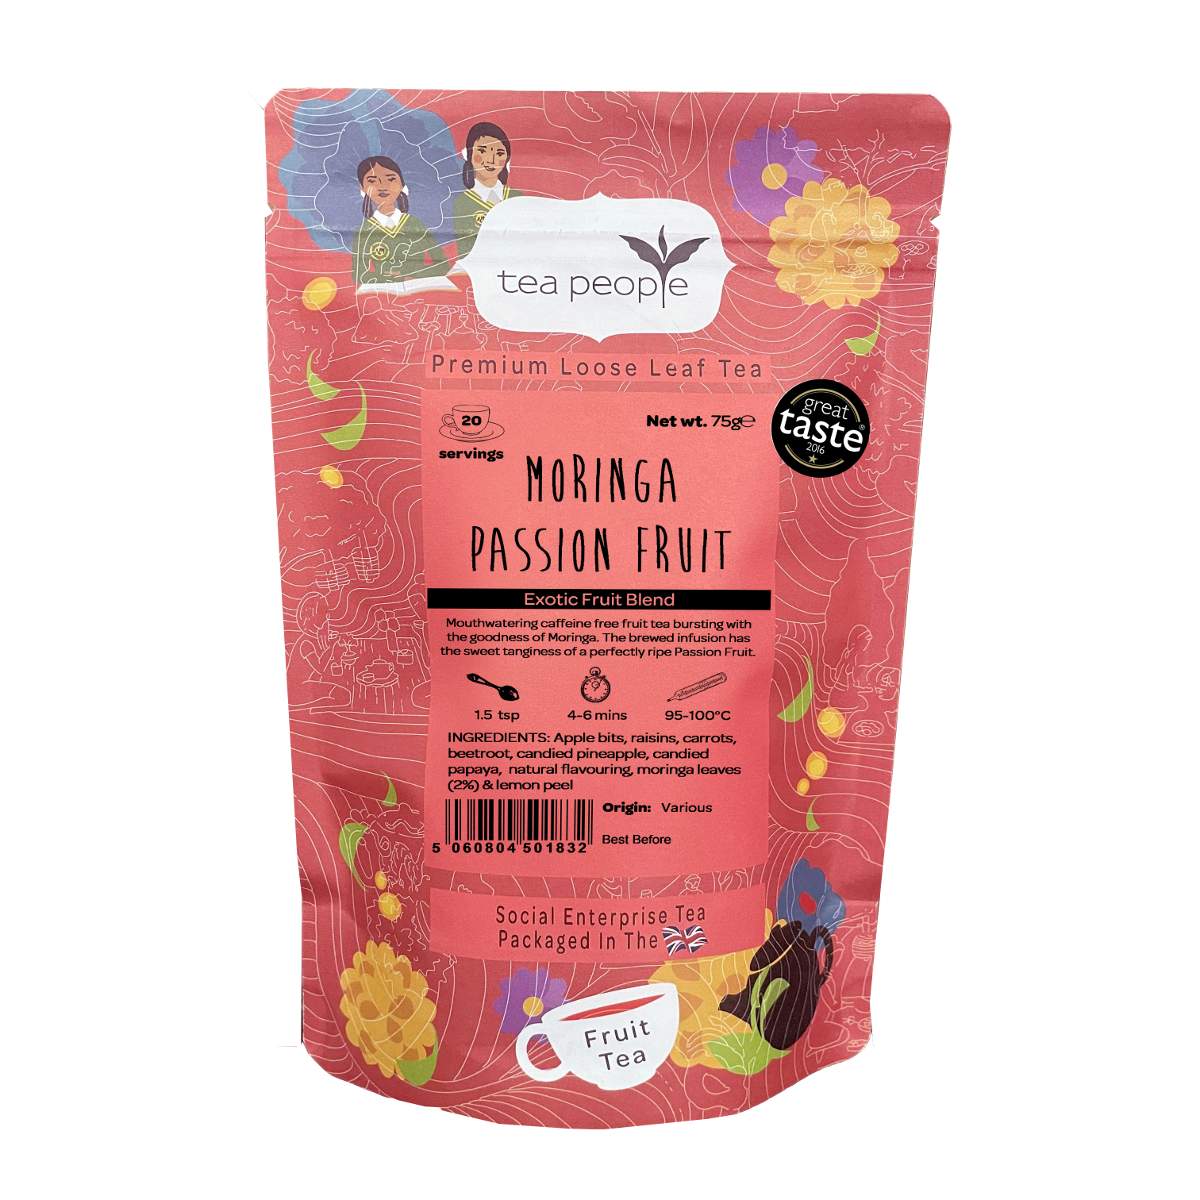 Moringa Passion Fruit - Loose Fruit Tea - 75g Retail Pack